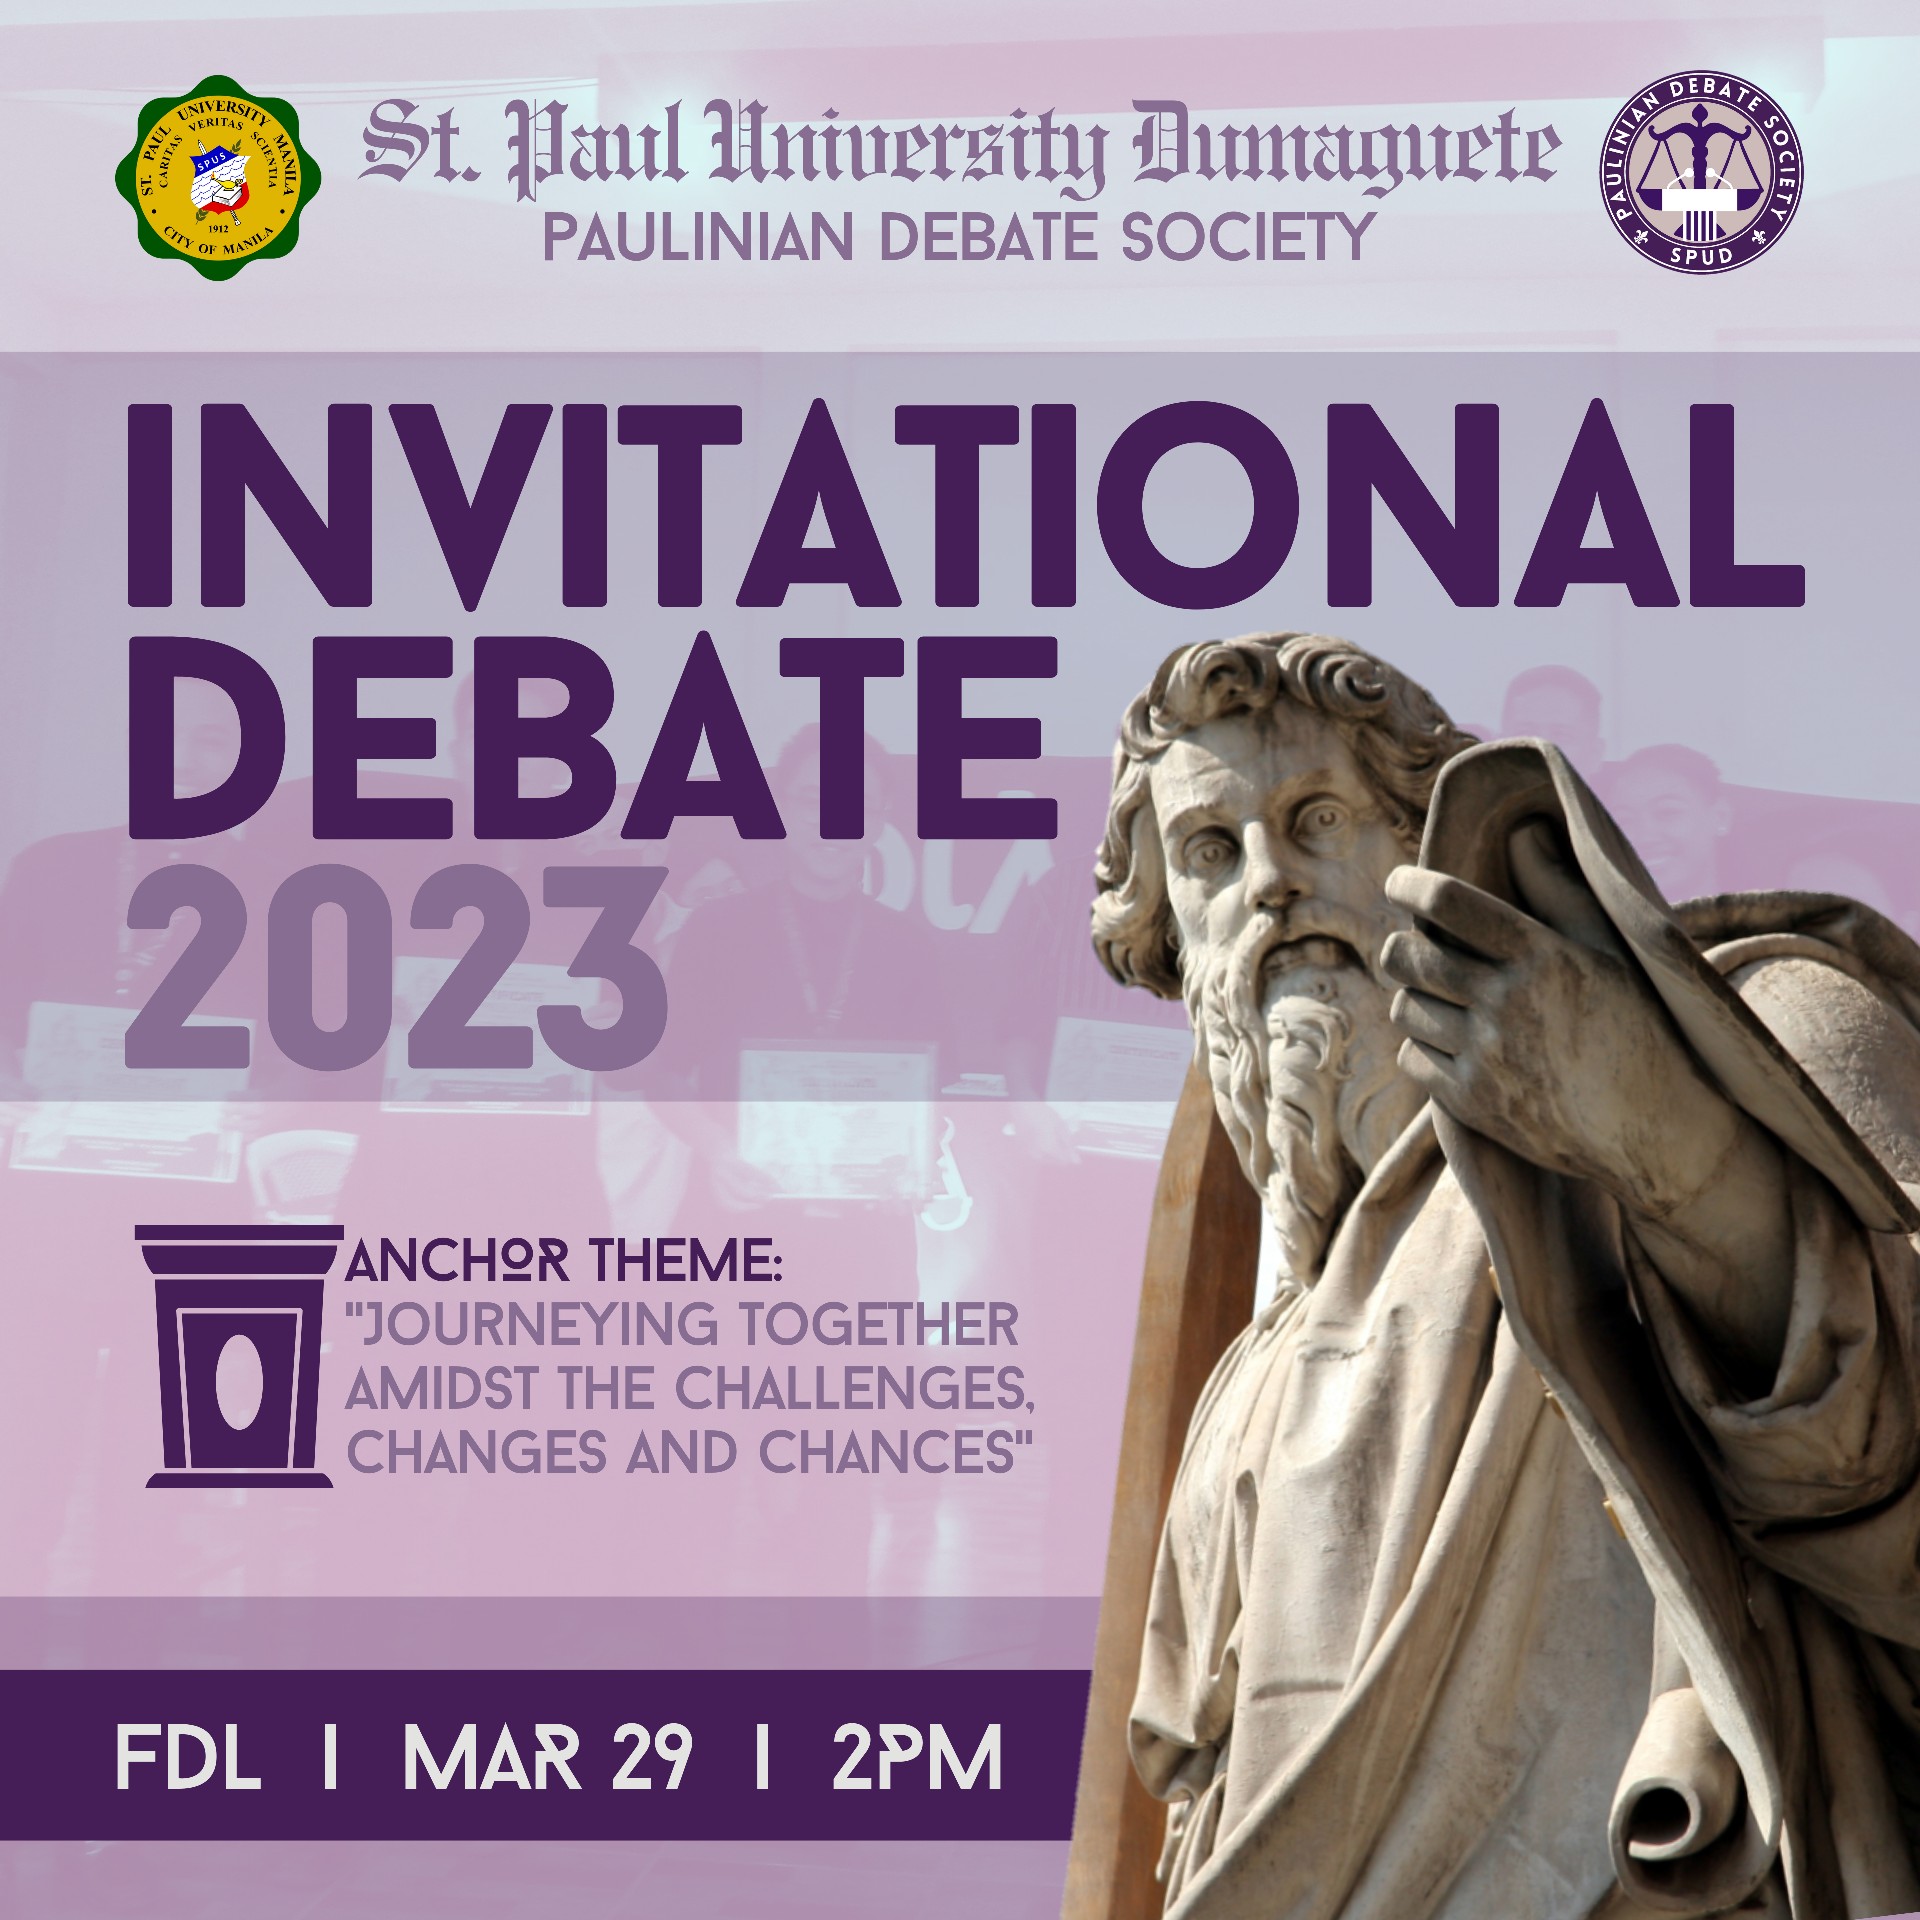 Paulinians! Get ready to witness the invitational debate 2023 between the paulinian debate society and the st. Joseph seminary college debating team